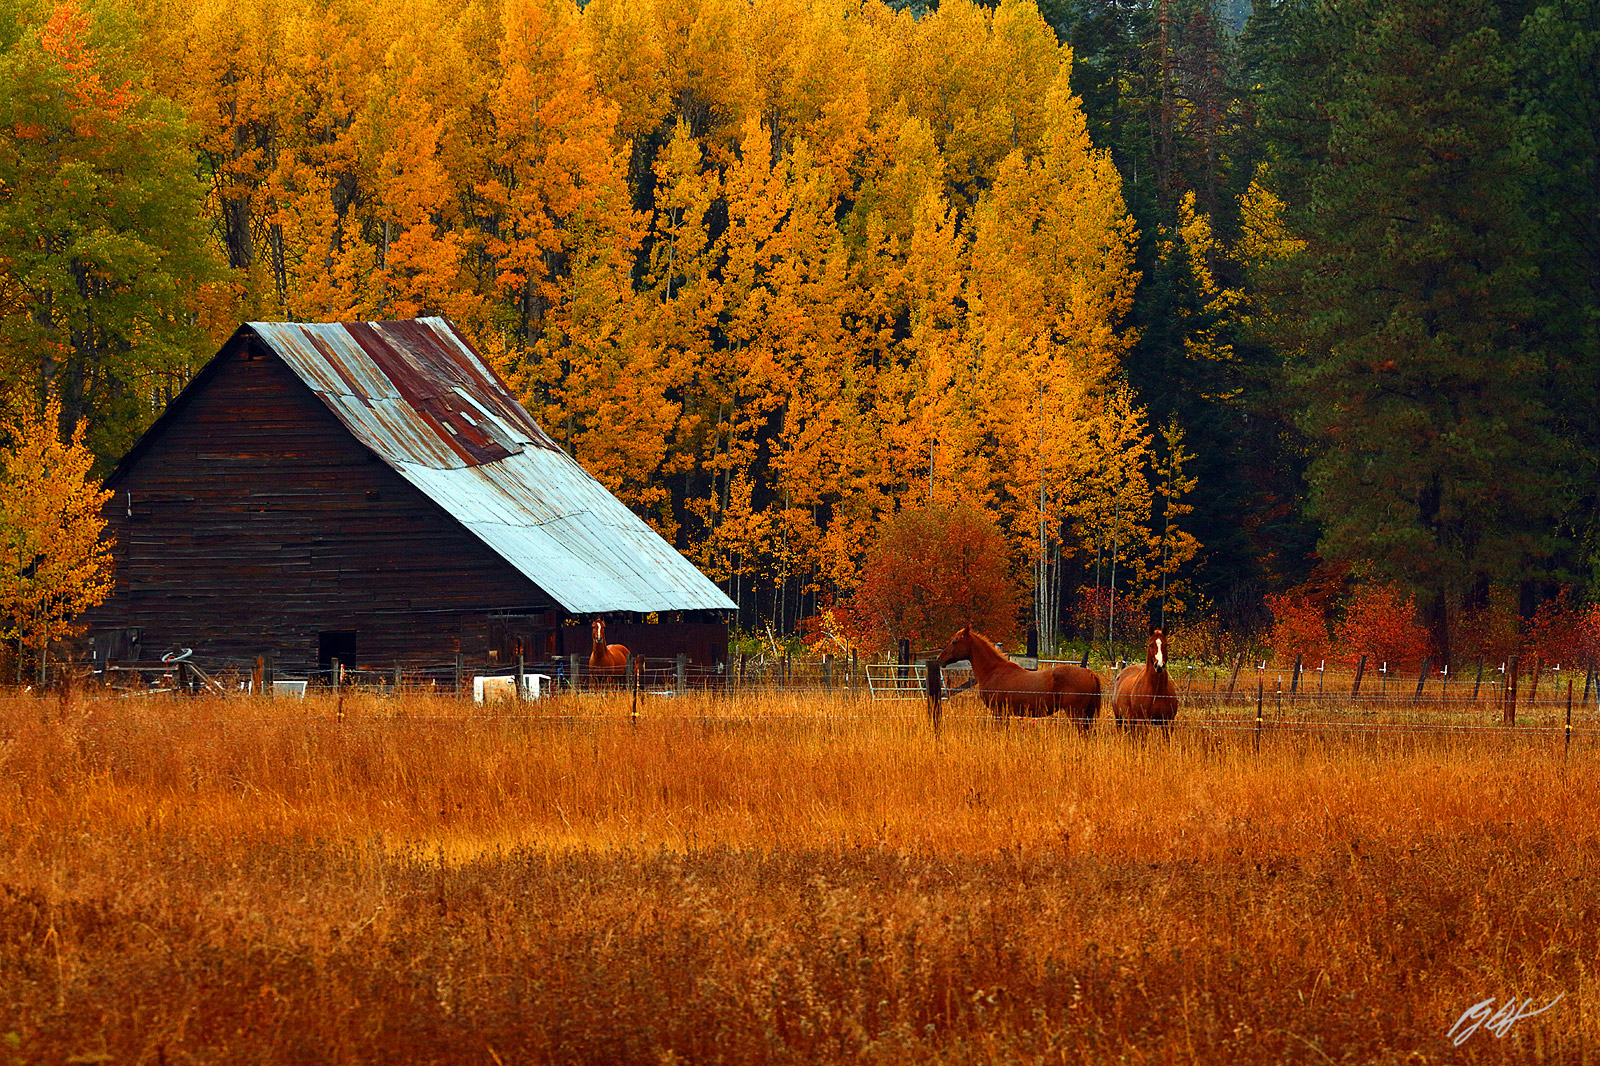 Fall Color Barn and Horses Along Highway 2 in Washington